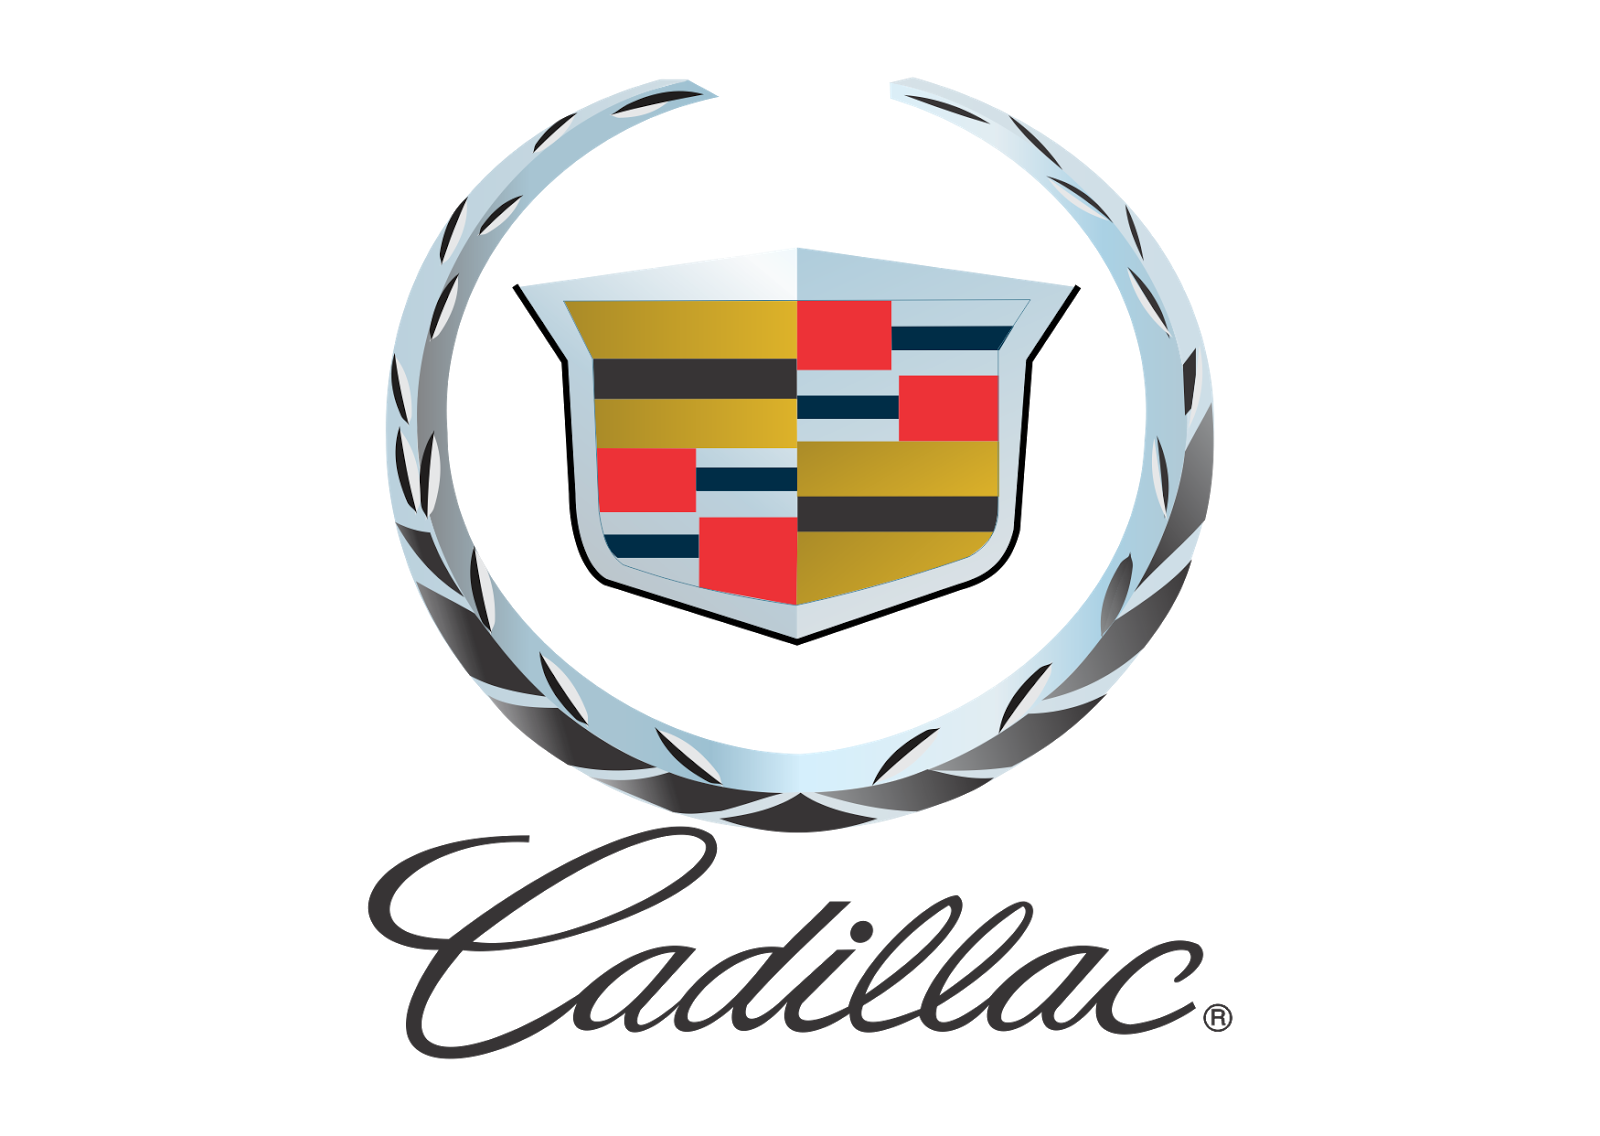 Free Cadillac Logo Transparent, Download Free Cadillac Logo Transparent ...